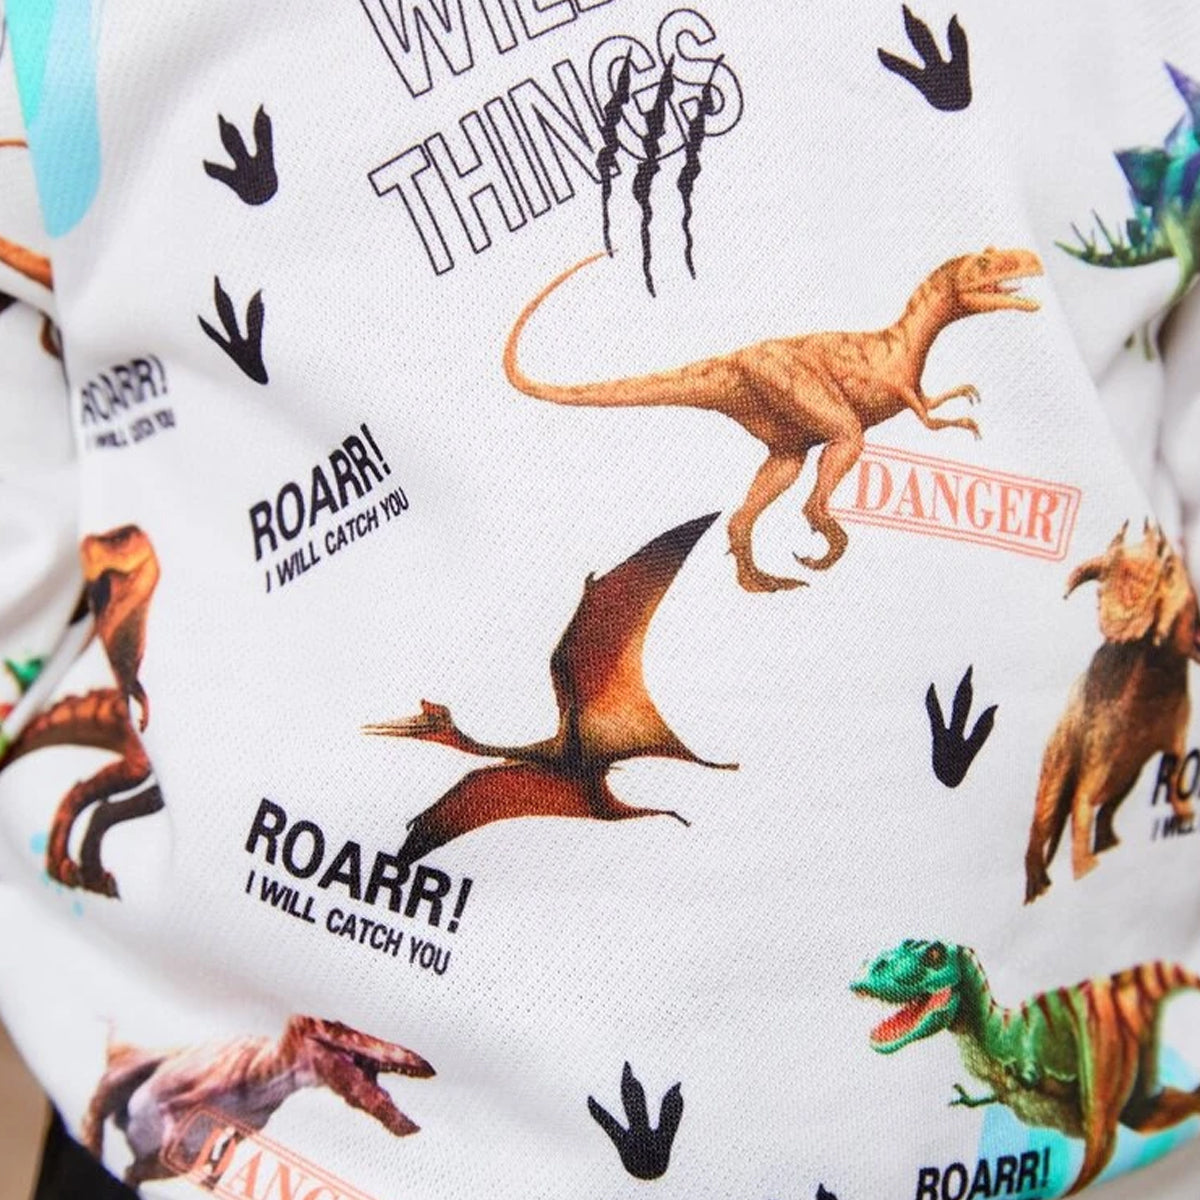 Venutaloza Baby-Set Dinosaur Graphic Print & Cami T-Shirt & Pants Two Piece Set For Boys.